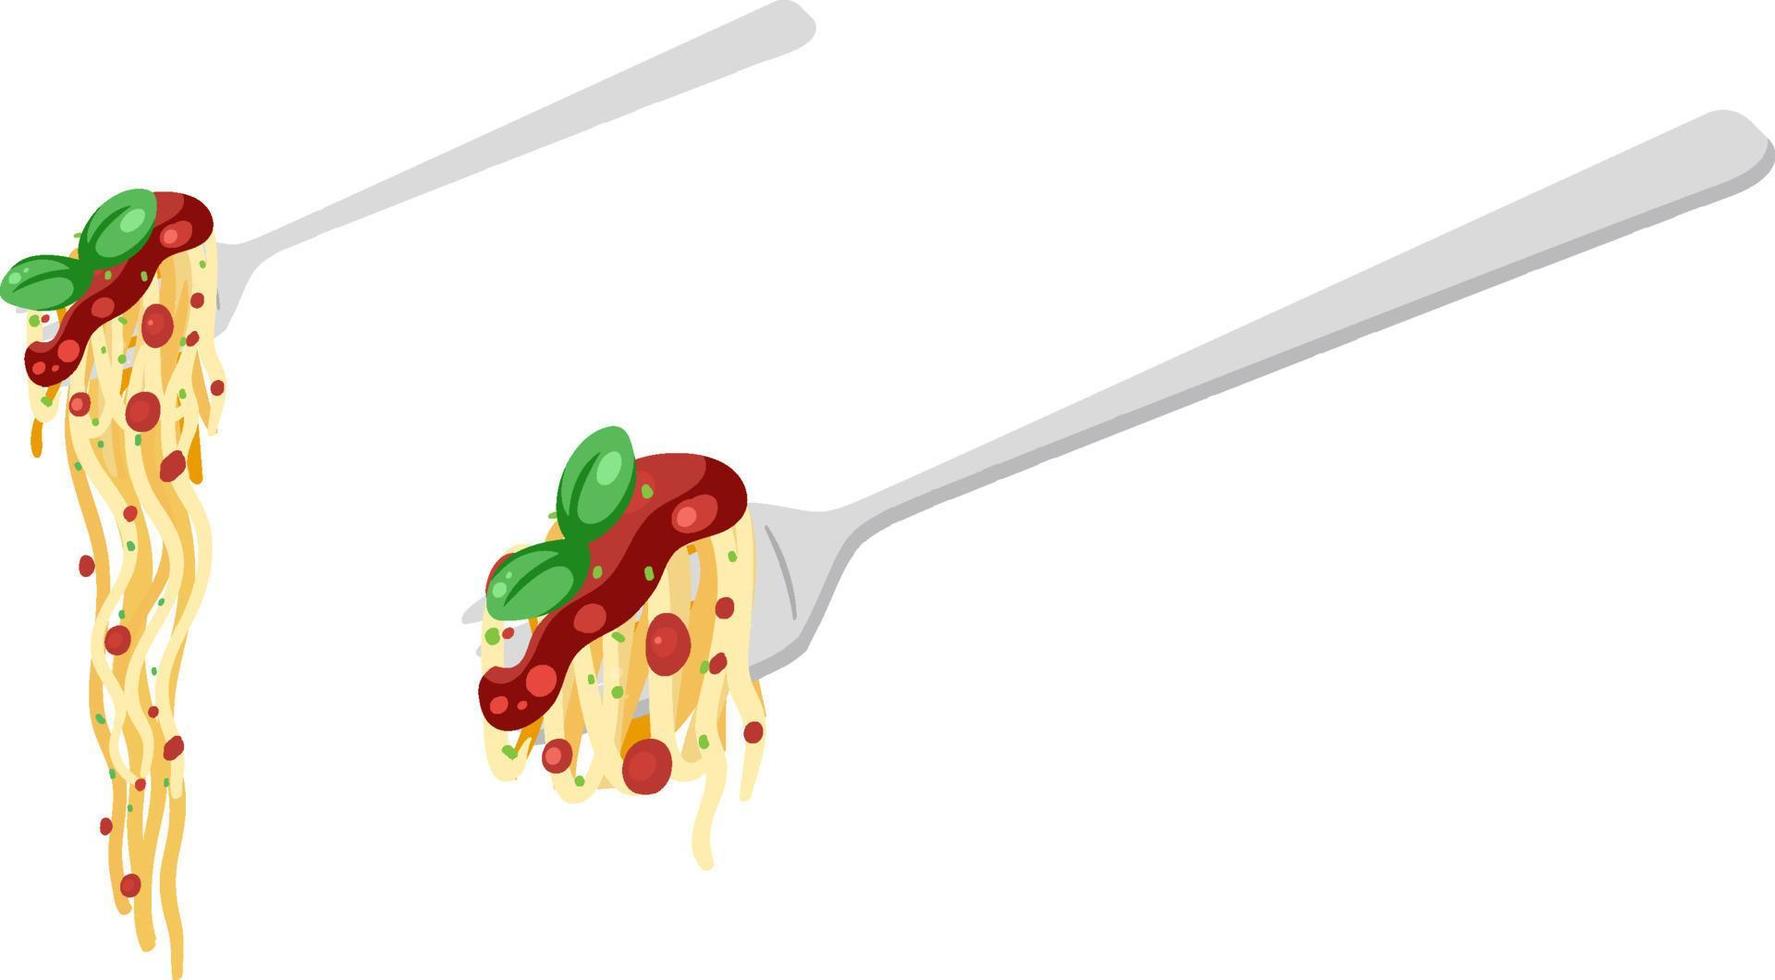 Spaghetti pasta with bolognese sauce vector